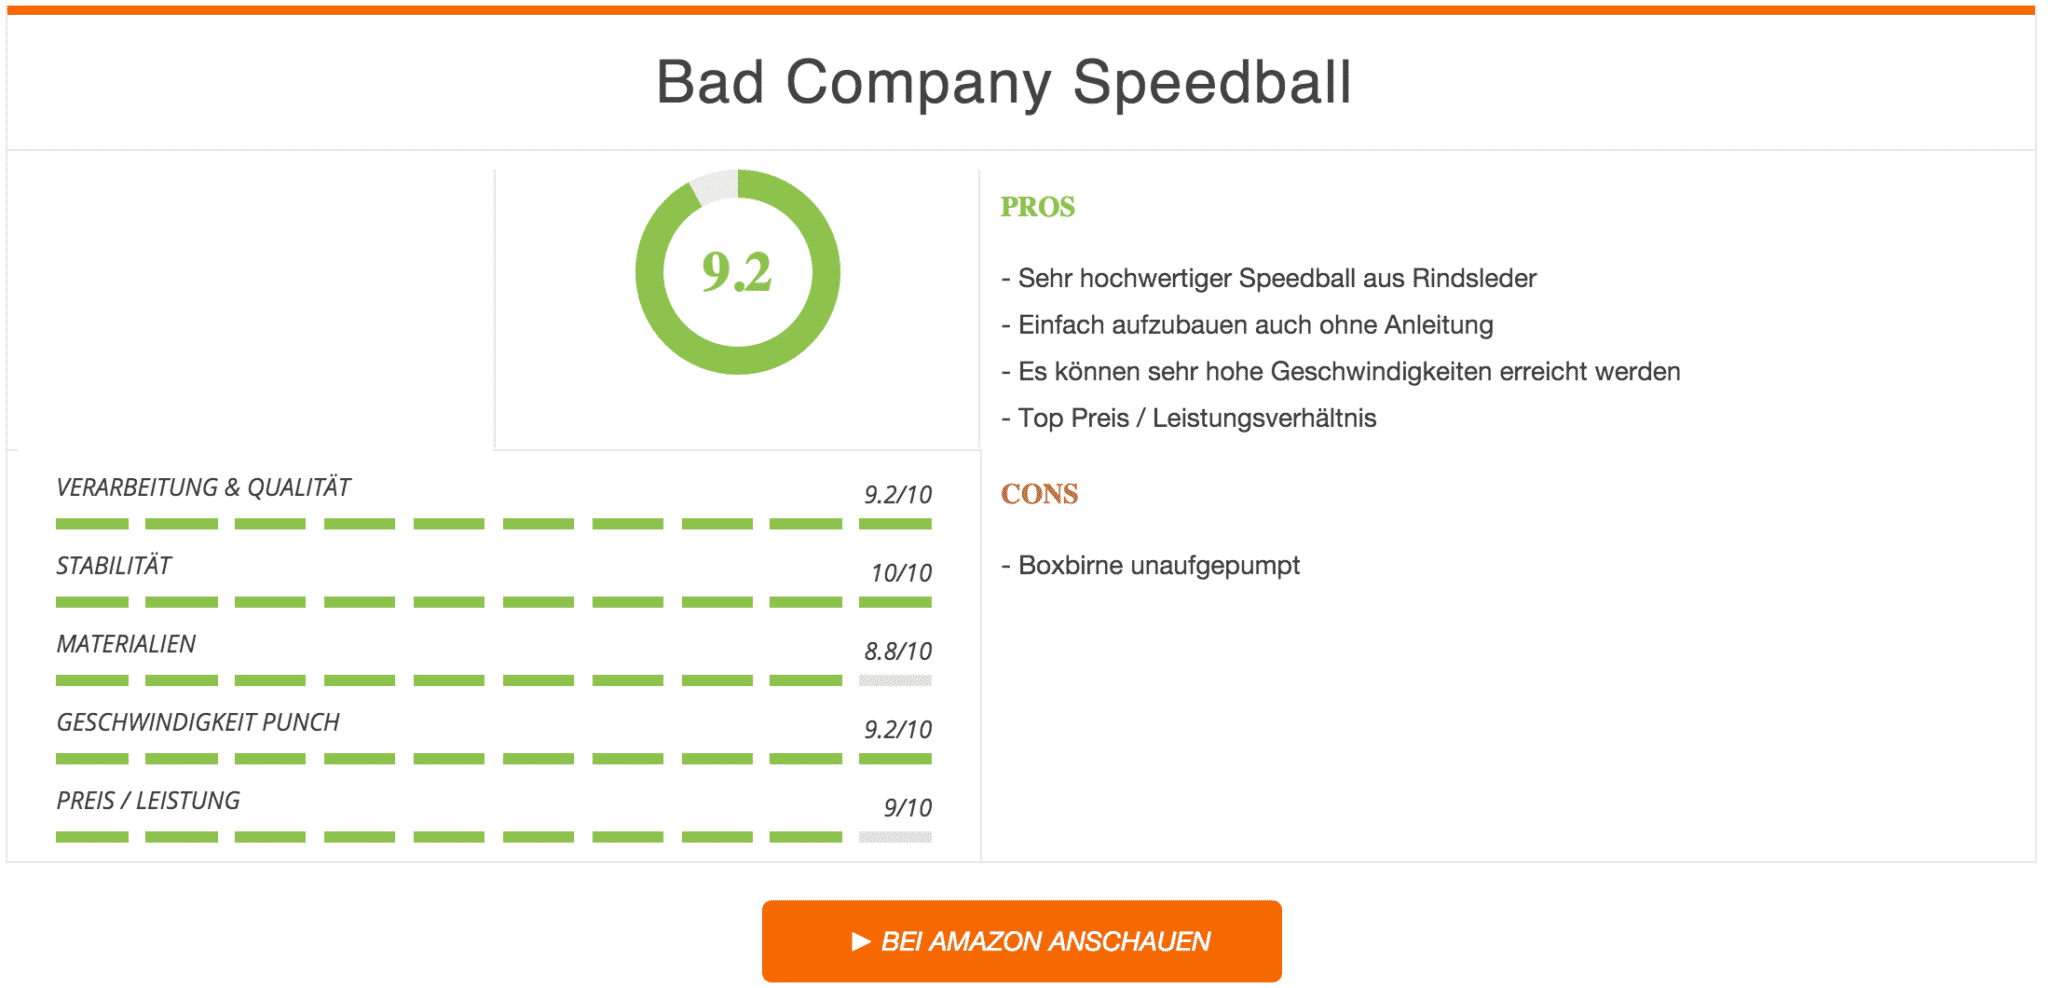 Bad Company Speedball Ergebnis